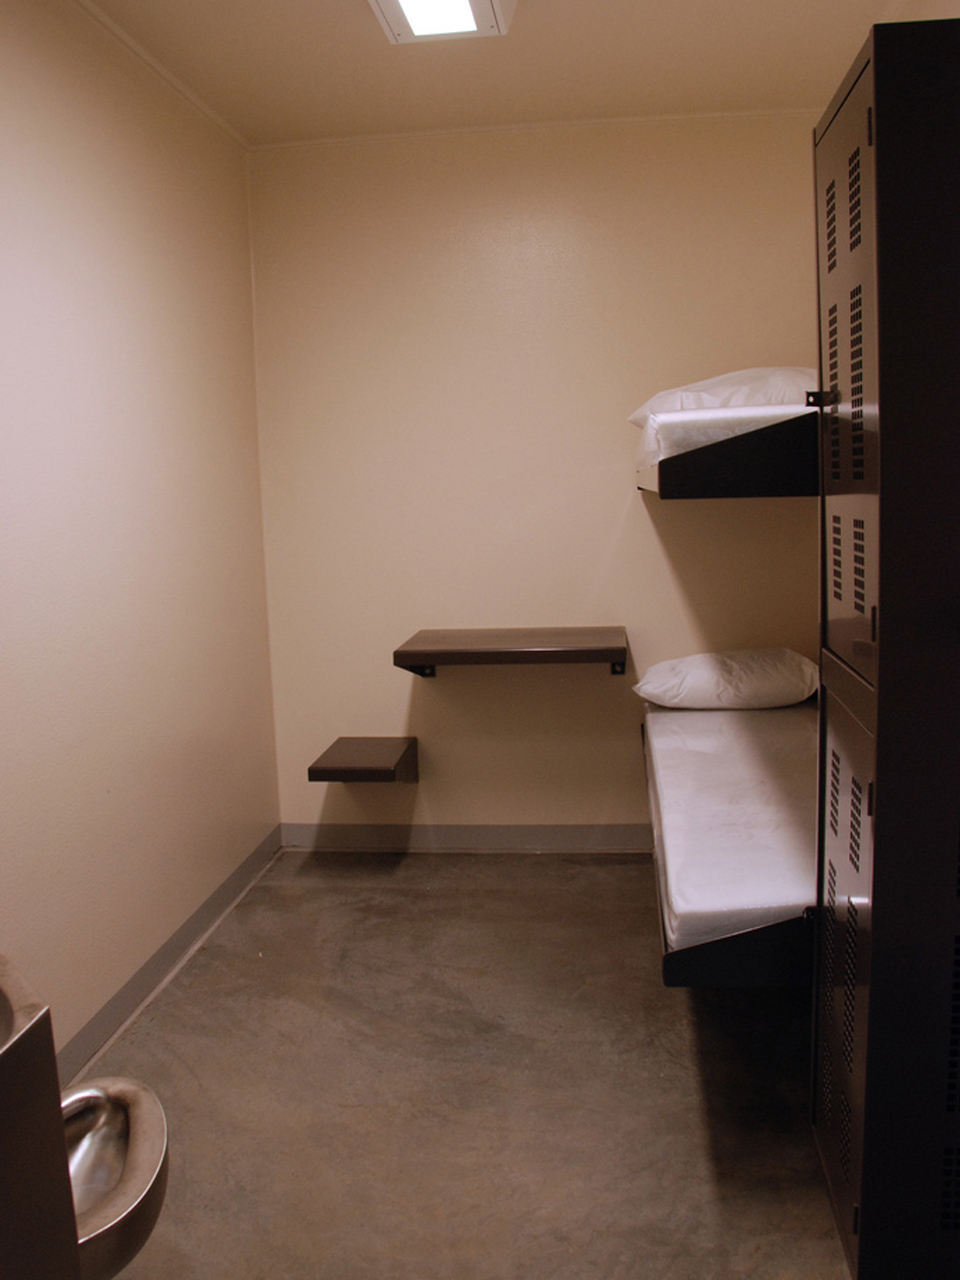 A look at Fort Leavenworth's pre-trial jail - CBS News